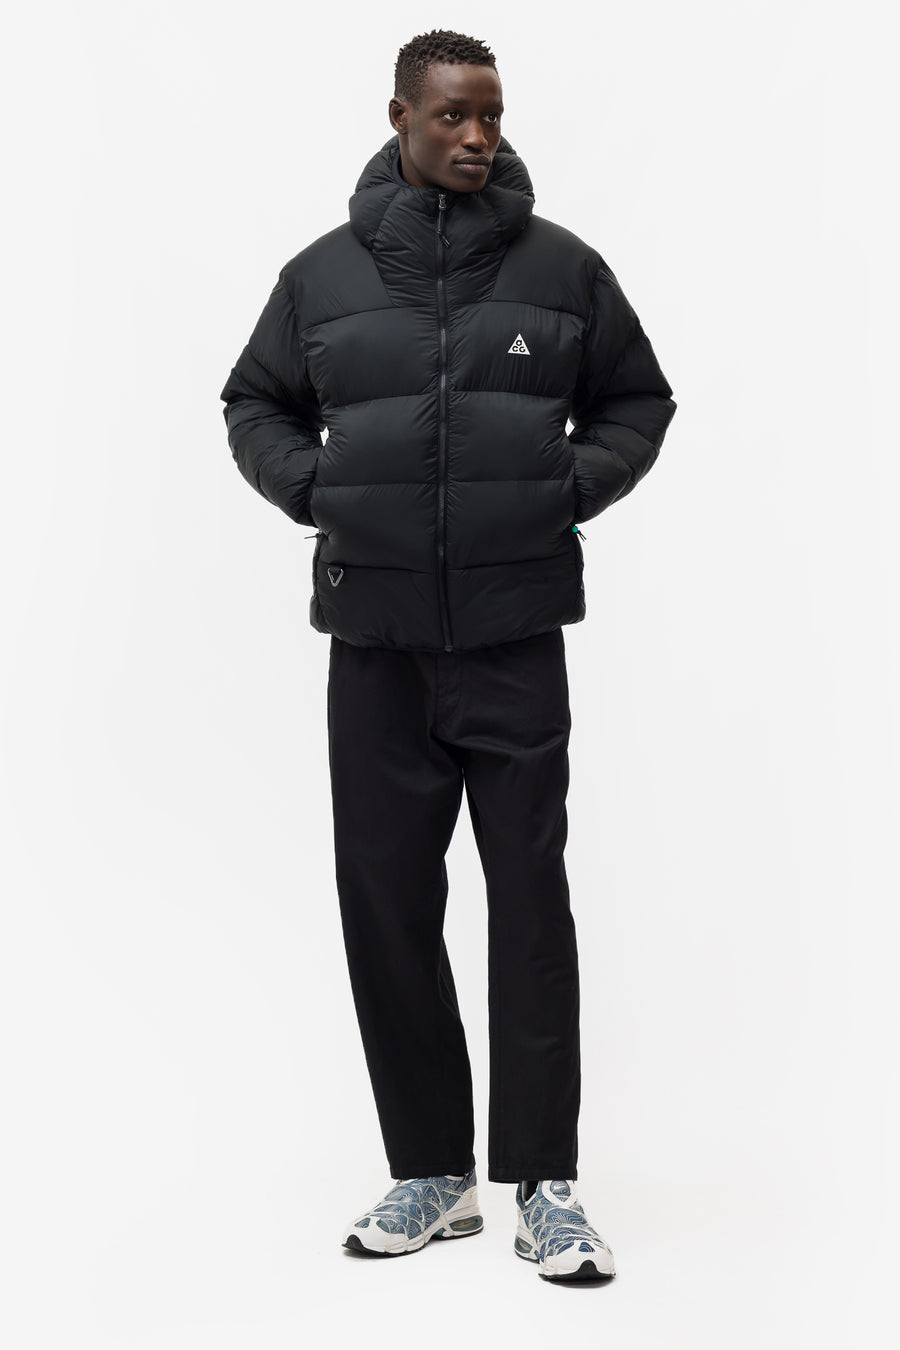 ACG Therma-Fit Lunar Lake Jacket in Black/Dark Smoke Grey